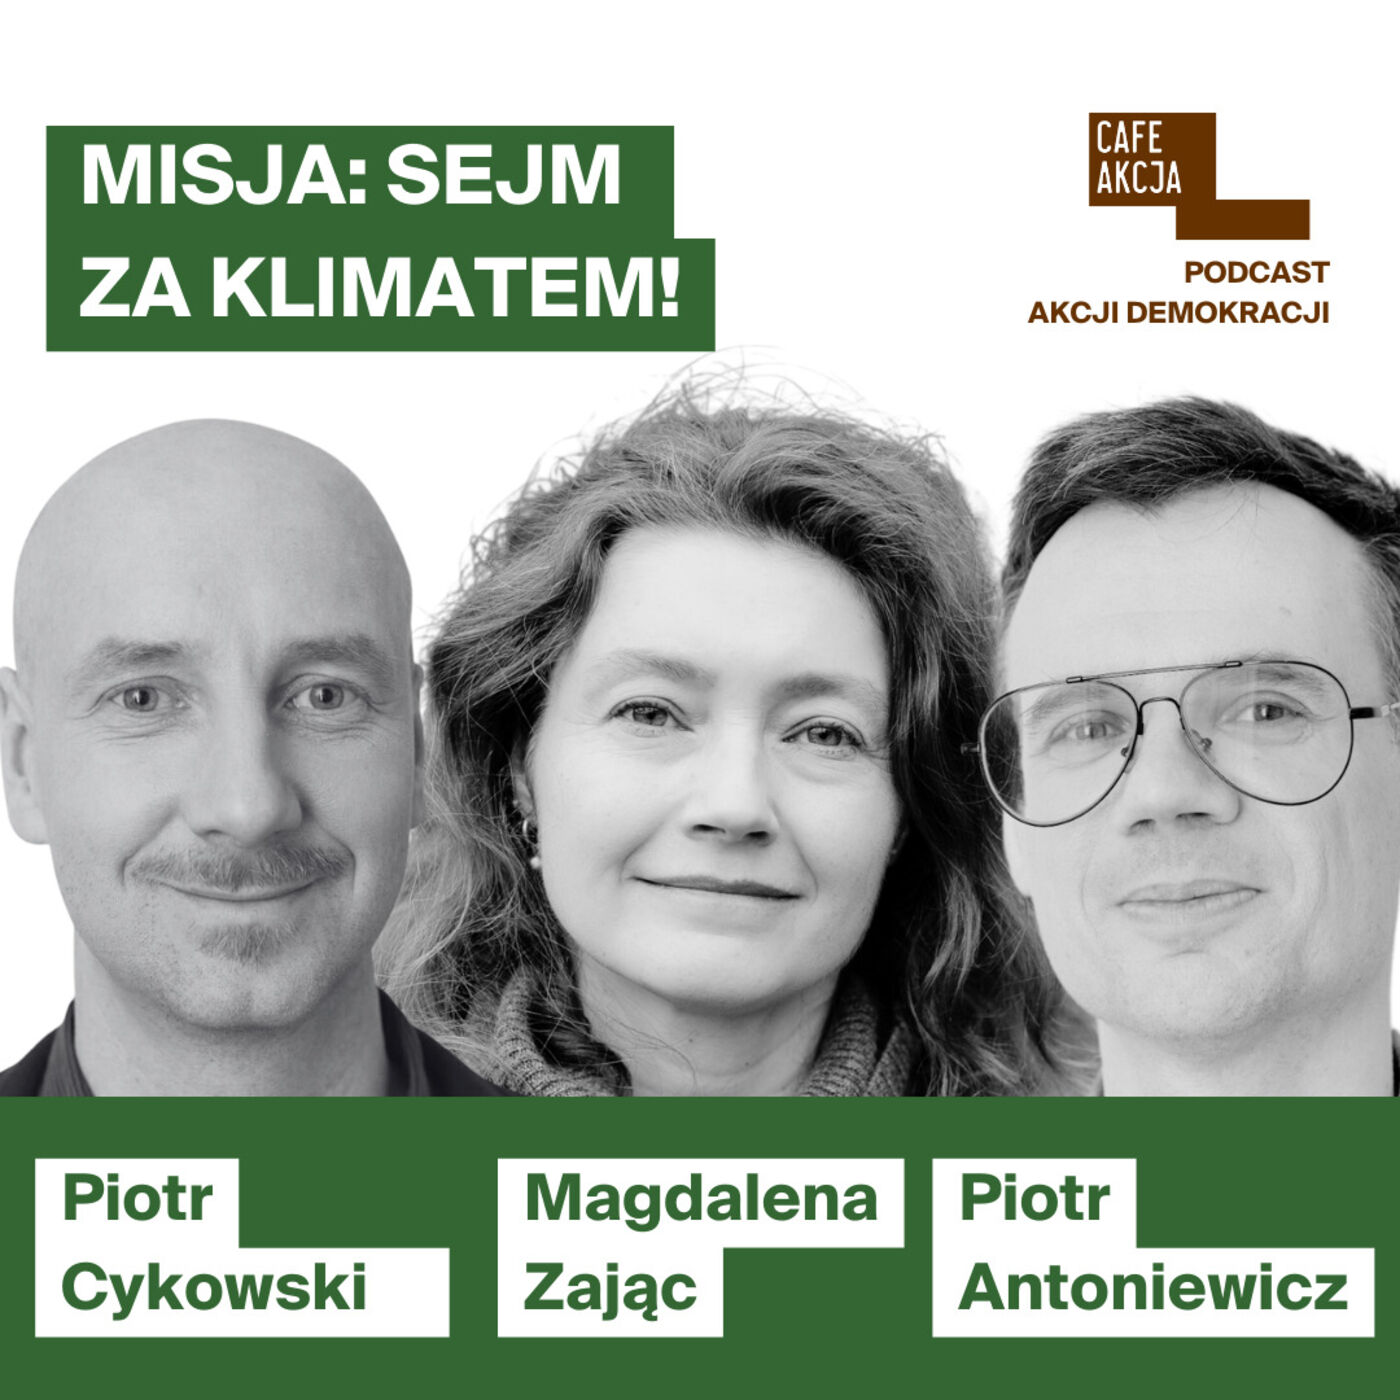 Podcast Cafe Akcja: Misja: Sejm za klimatem!